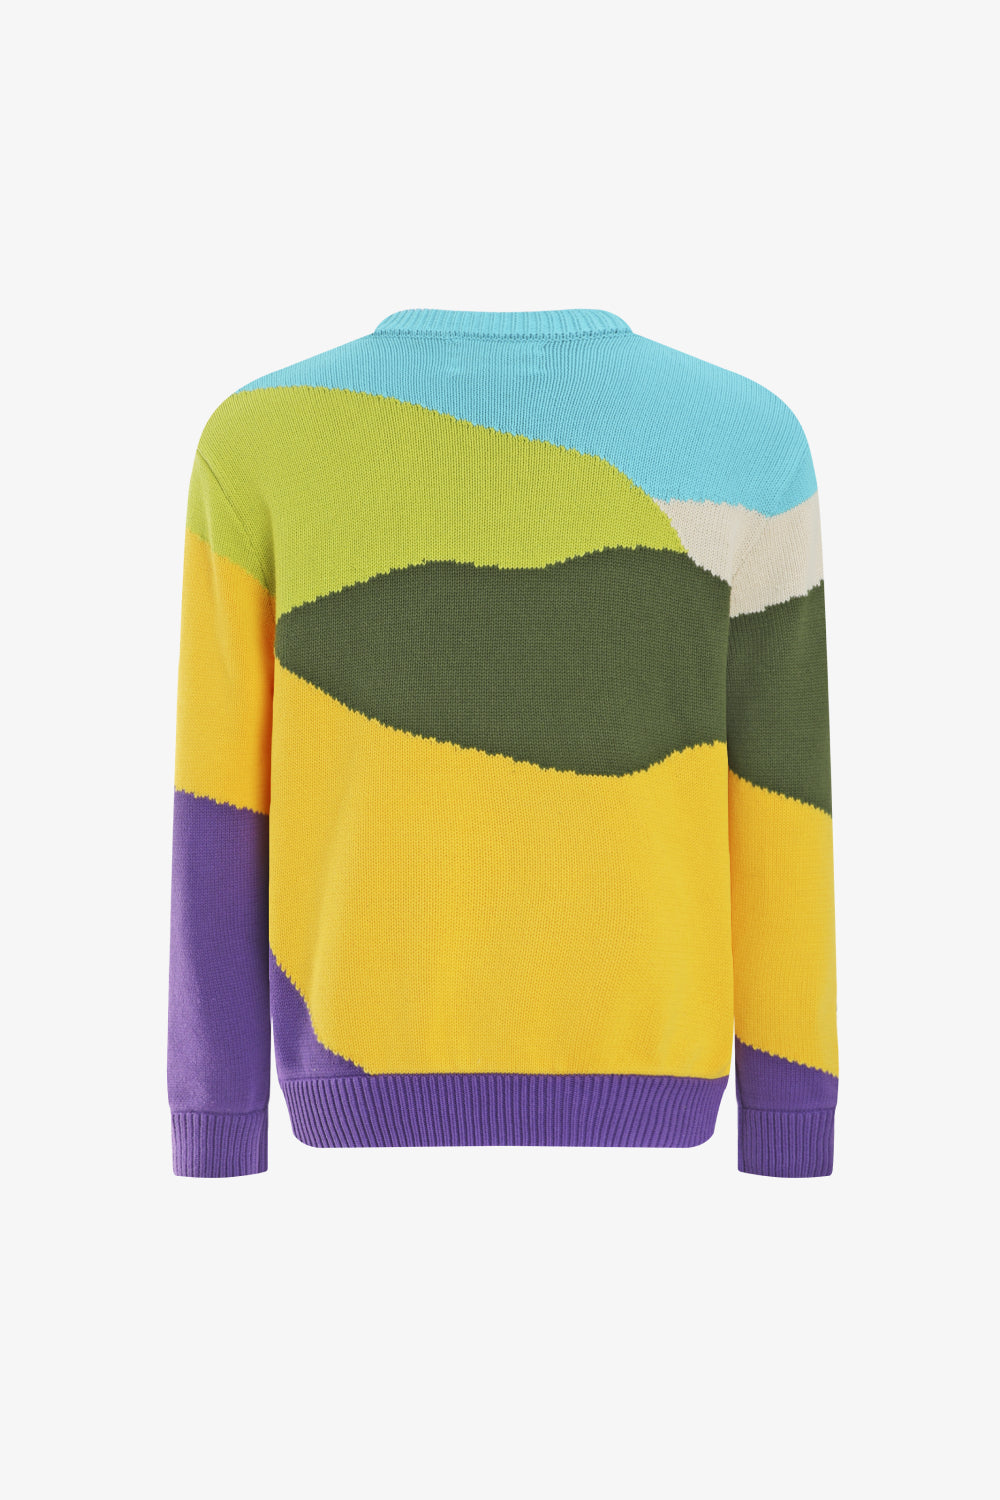 Nanohana Sweater